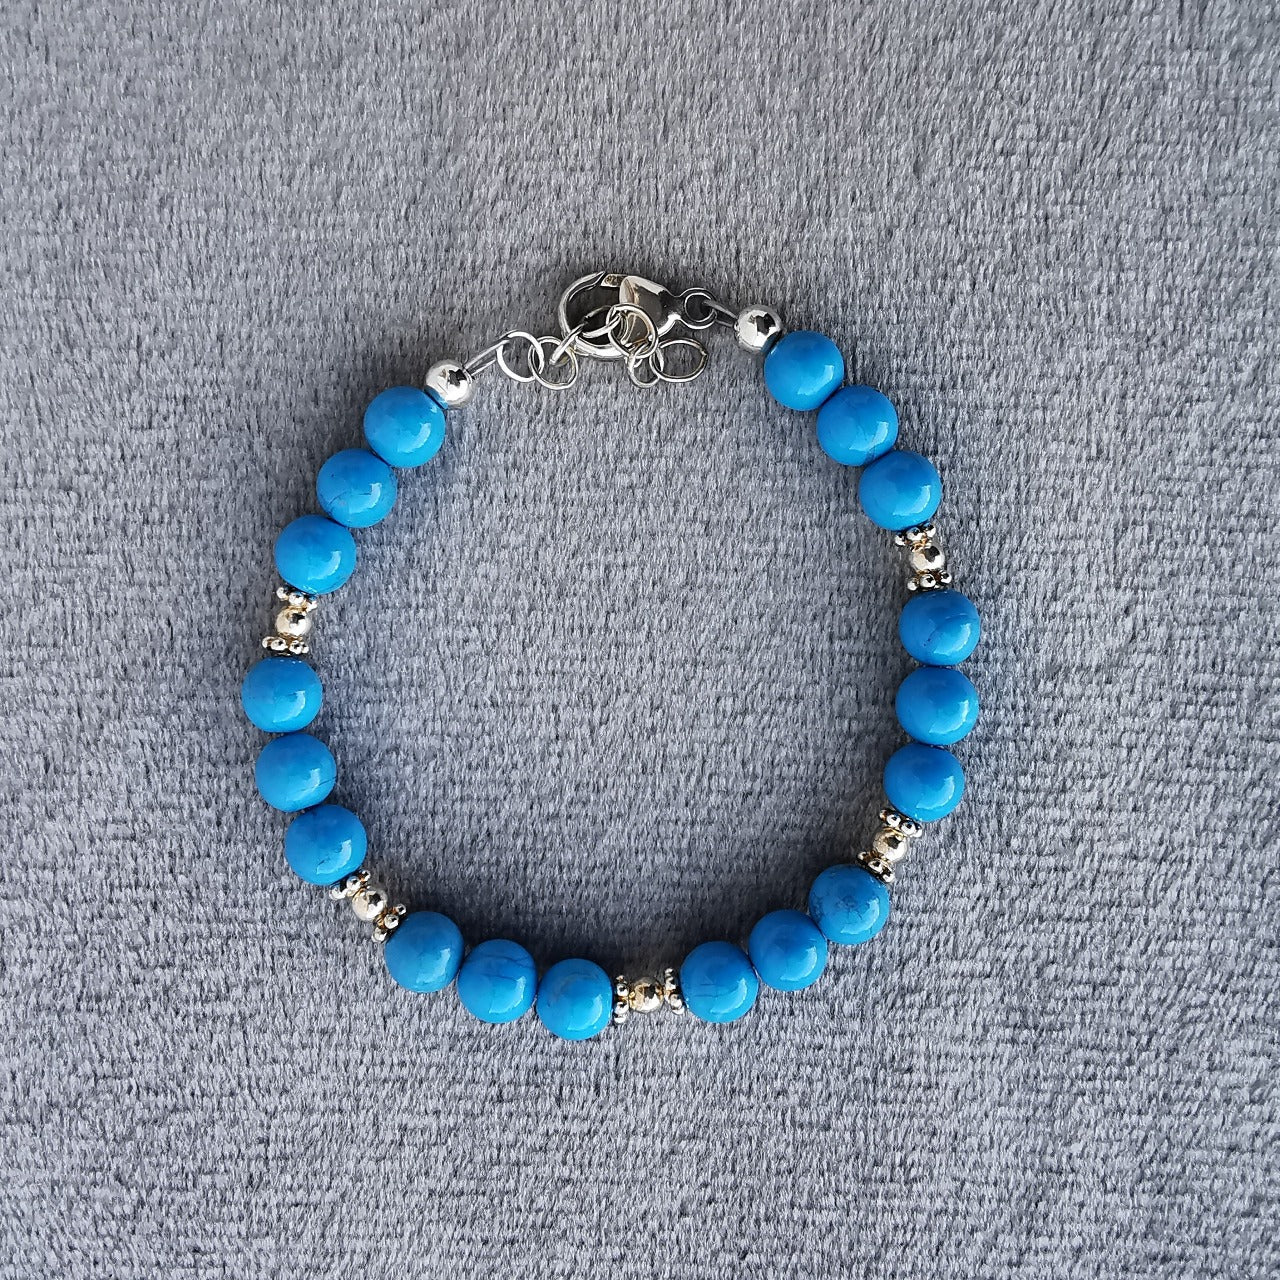 Blå Howlitt krystall steinarmbånd - Blue Howlite Crystal Gemstone Bracelet